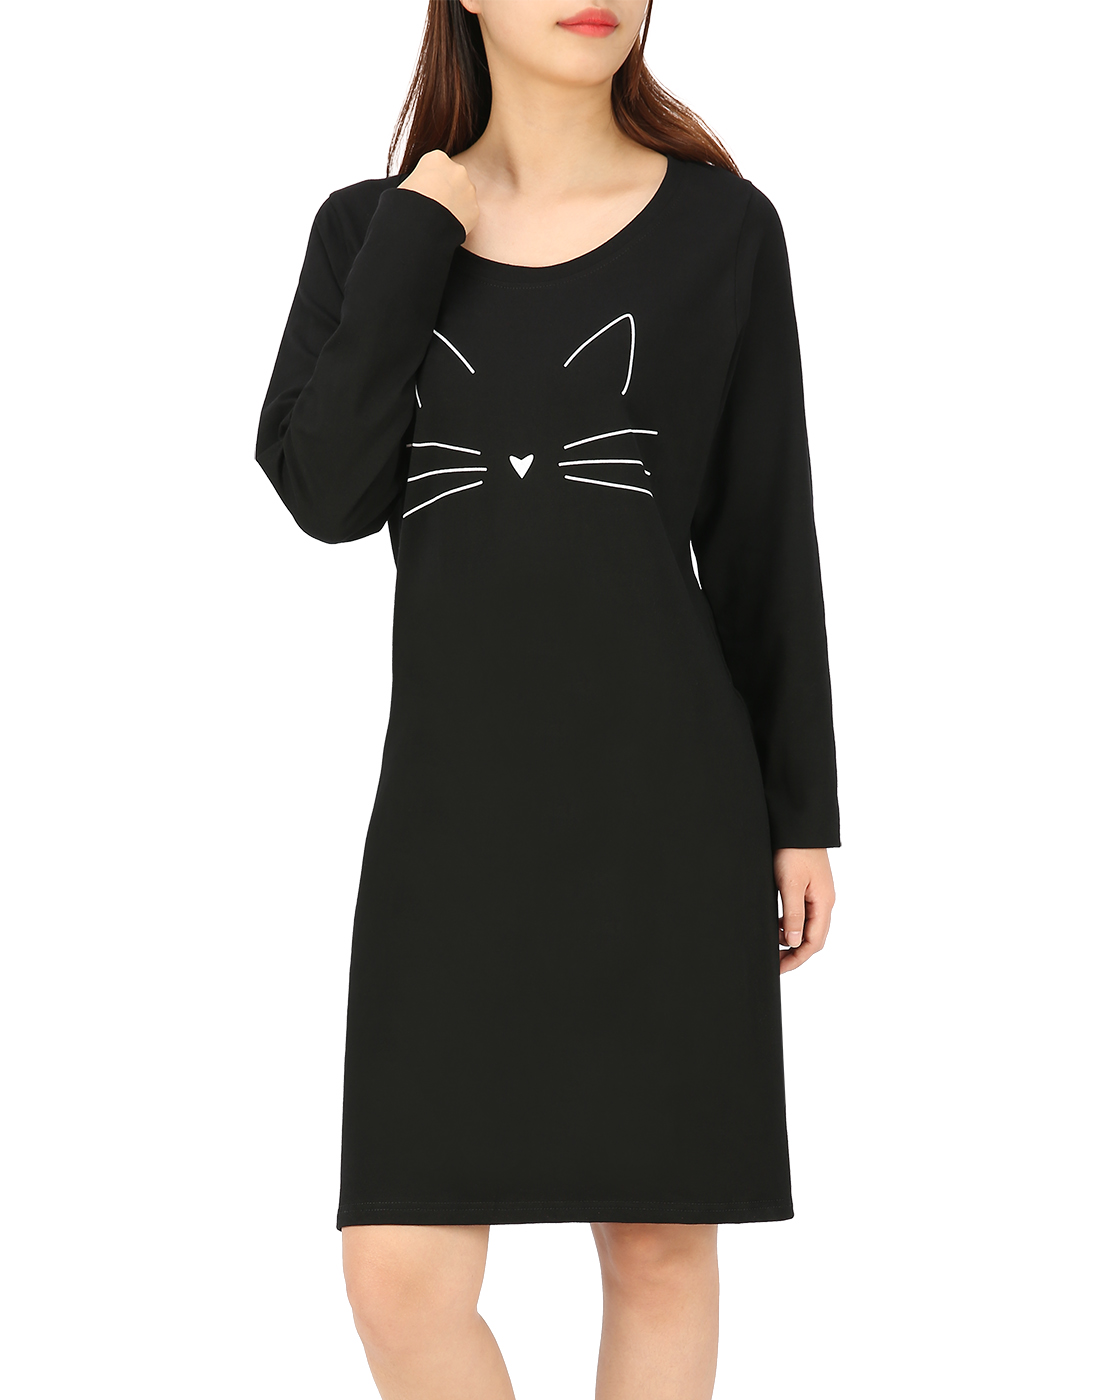 HDE Women's Cotton Nightgowns Short Sleeve Sleep Dress Coffee Tie